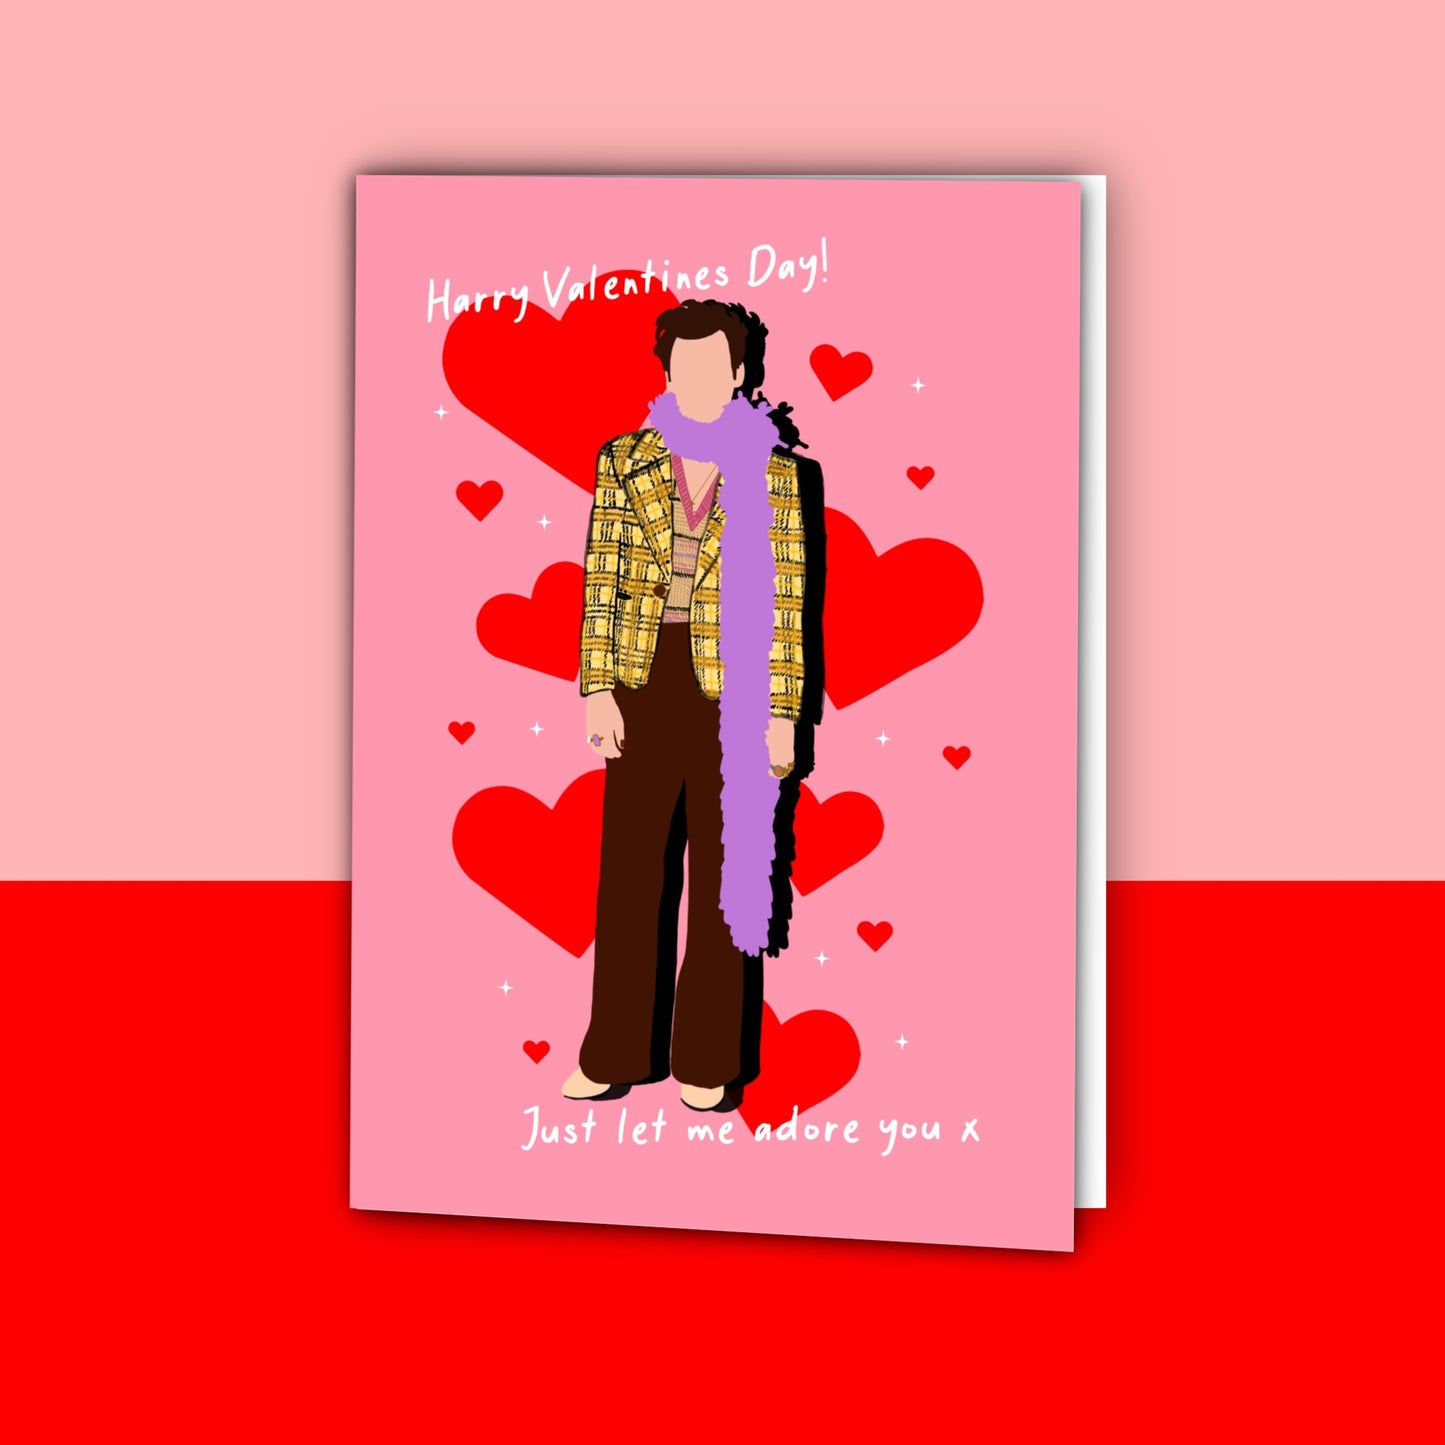 Harry Valentine’s Day Card